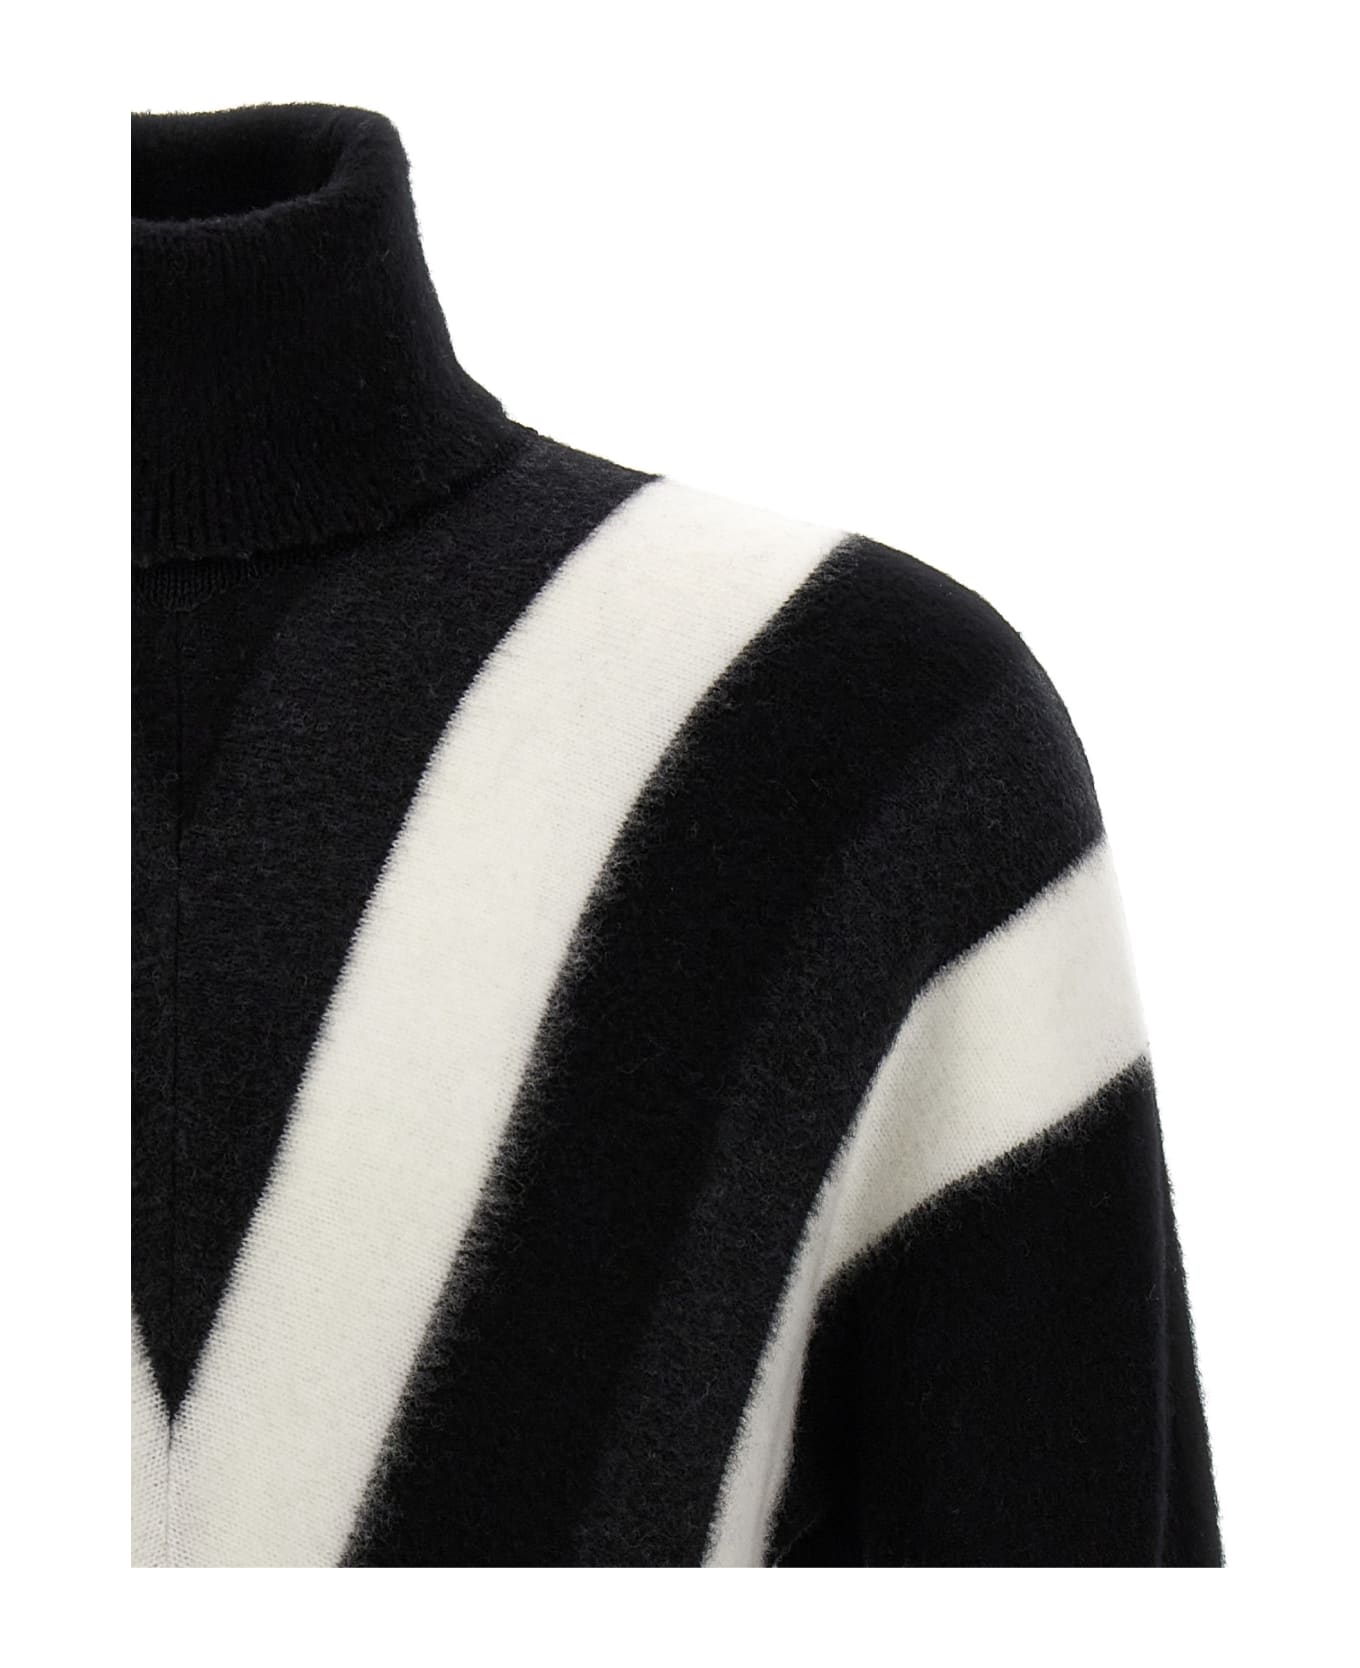 Saint Laurent Geometric Pattern Sweater - White/Black